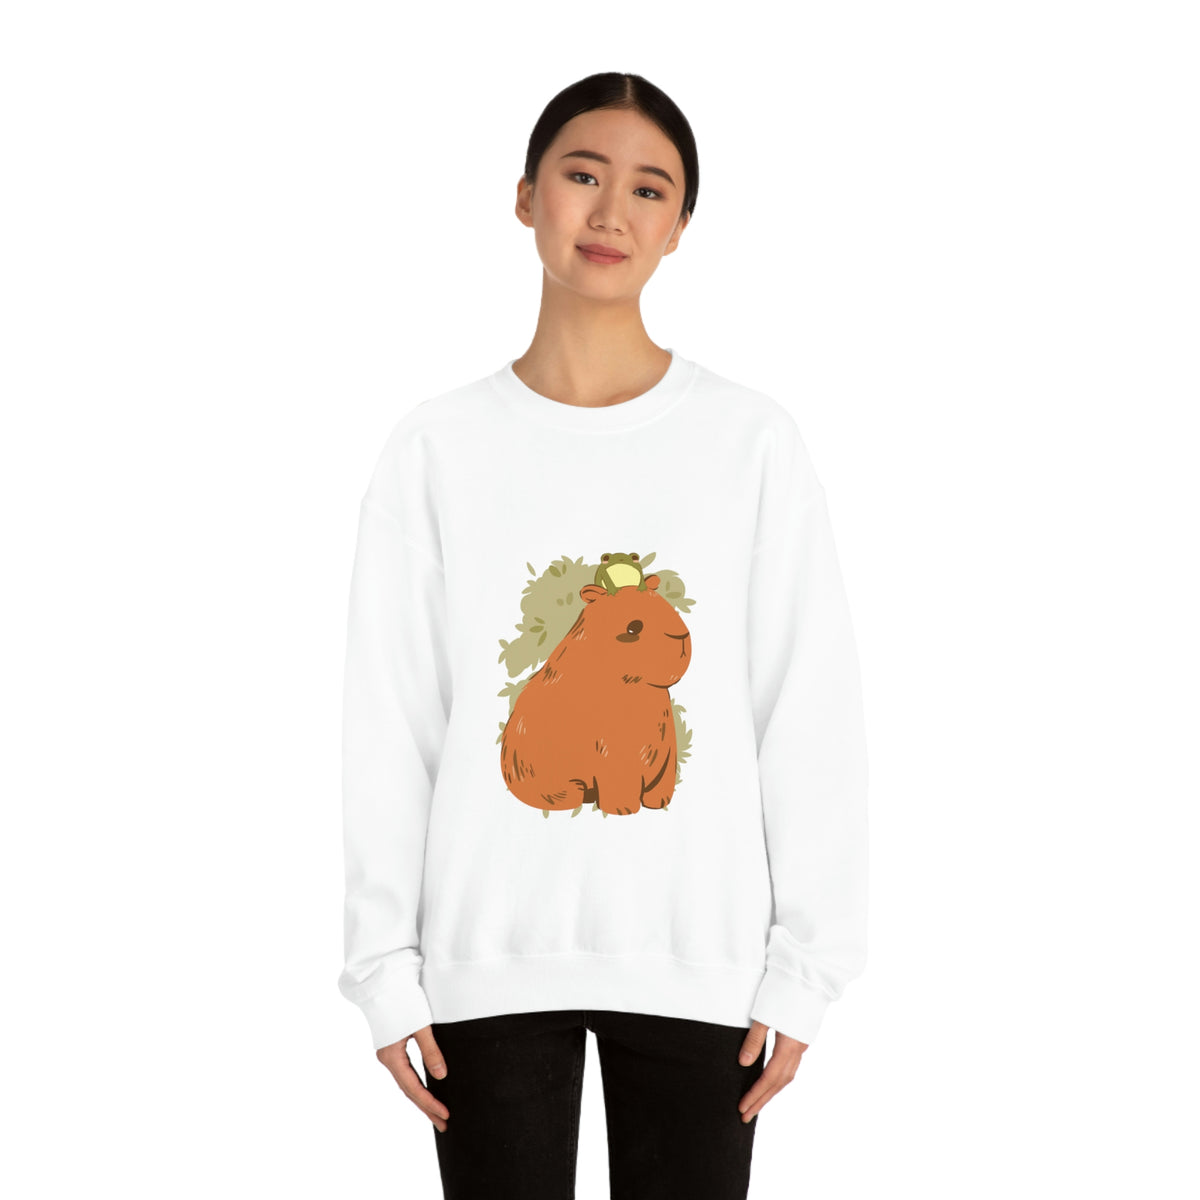 Capybara and Frog - Unisex Sweatshirt